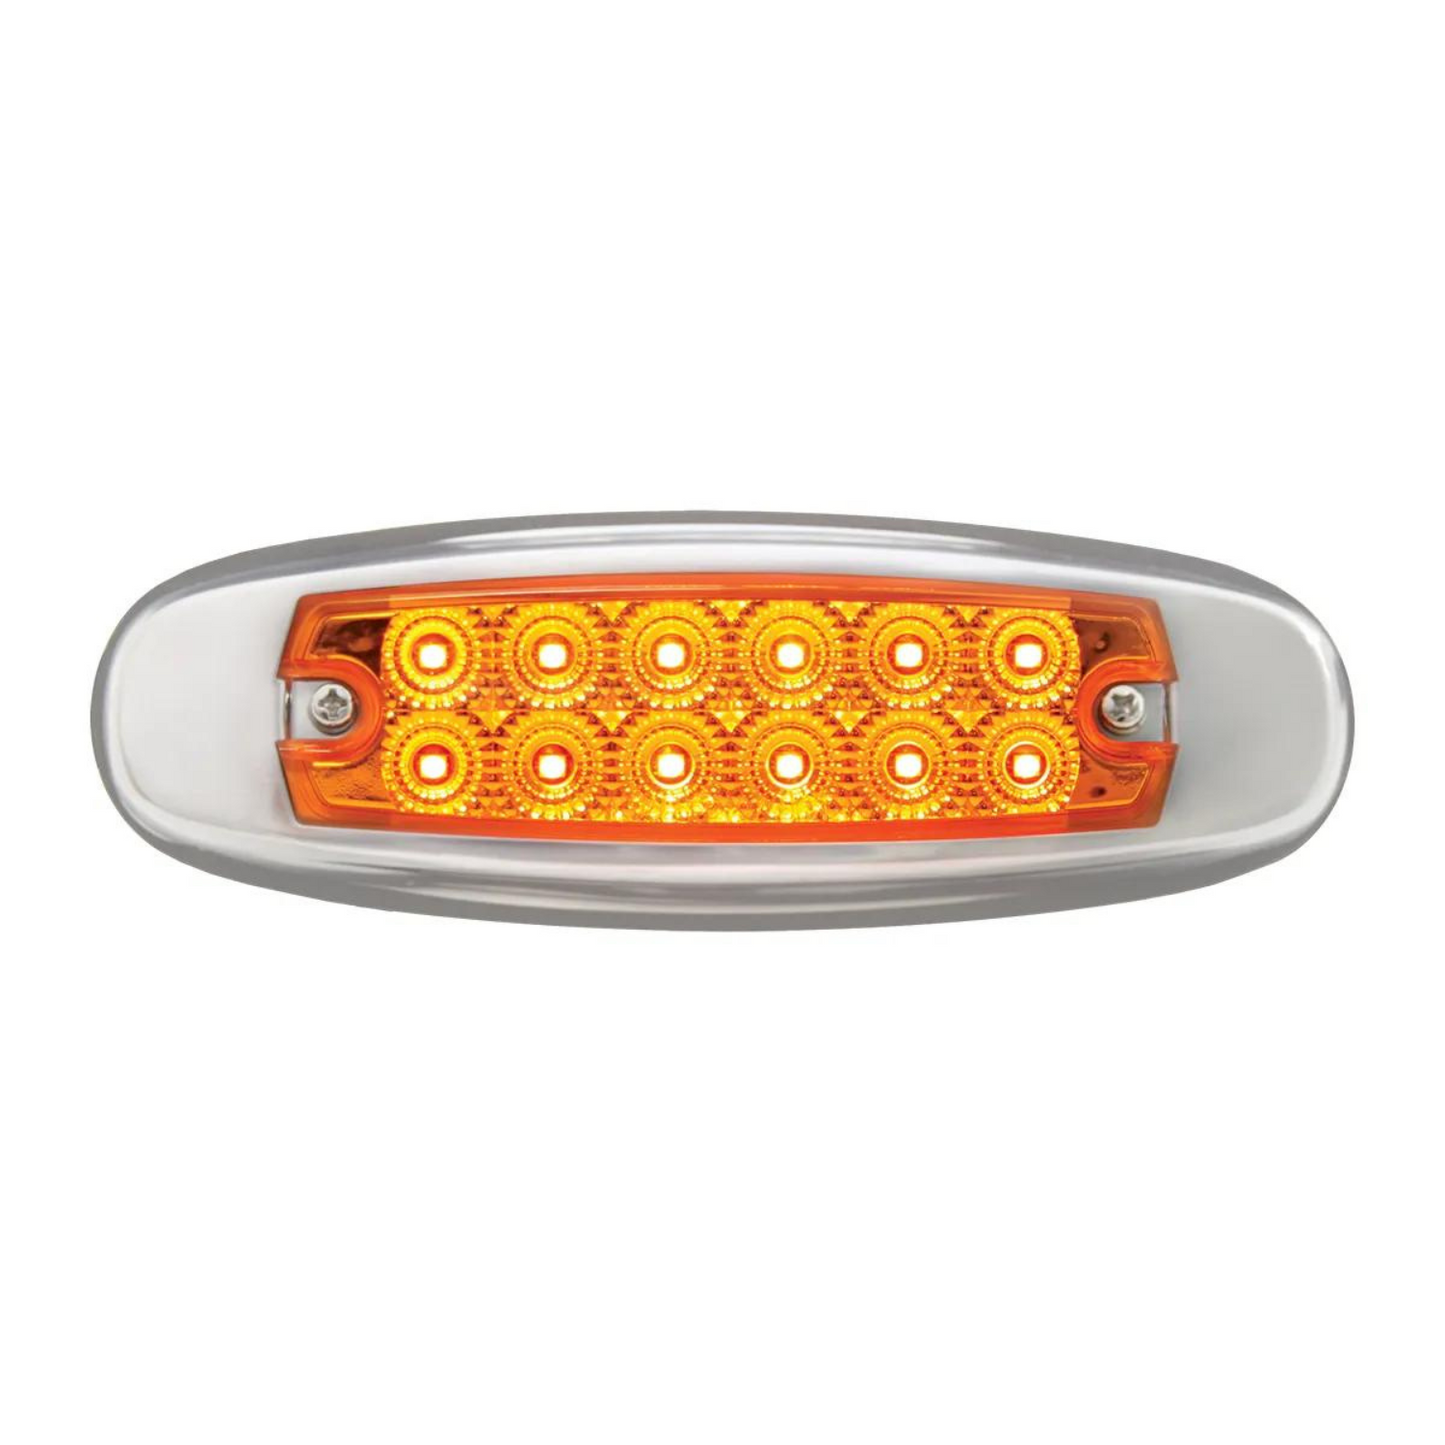 Spyder 12 LED Light with Stainless Steel Bezel in Amber